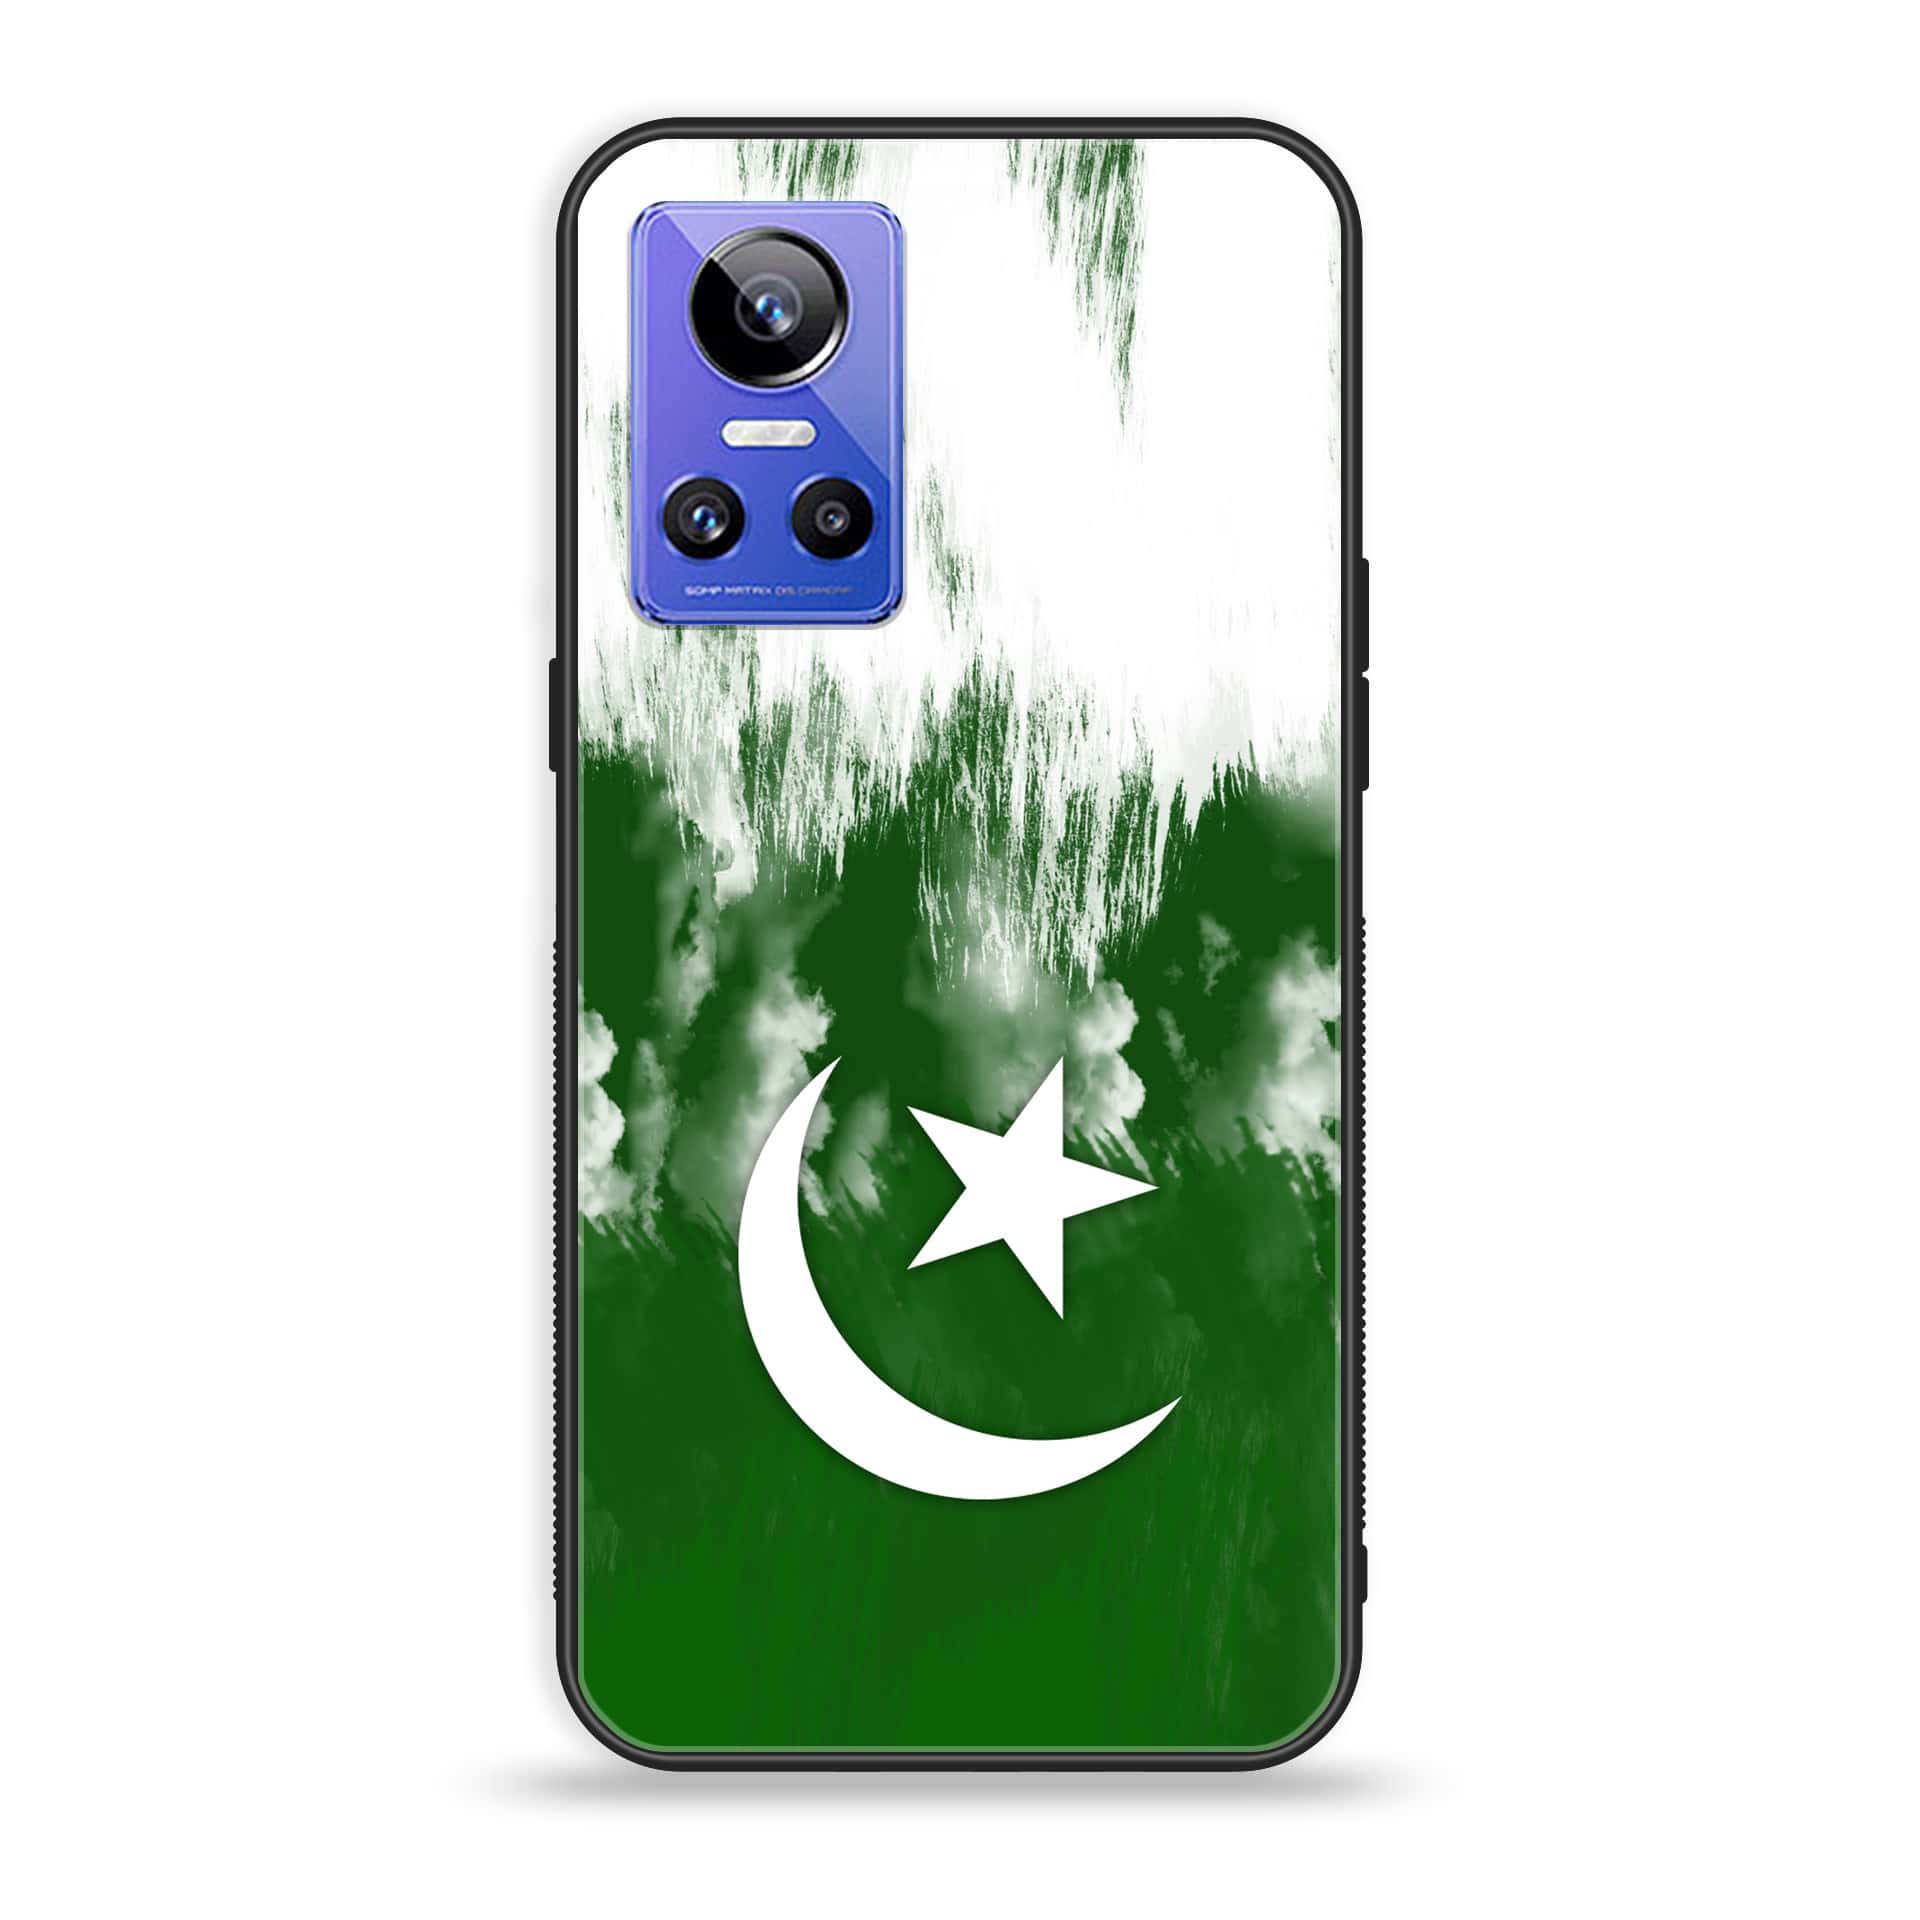 Realme GT Neo 3 - Pakistani Flag Series - Premium Printed Glass soft Bumper shock Proof Case